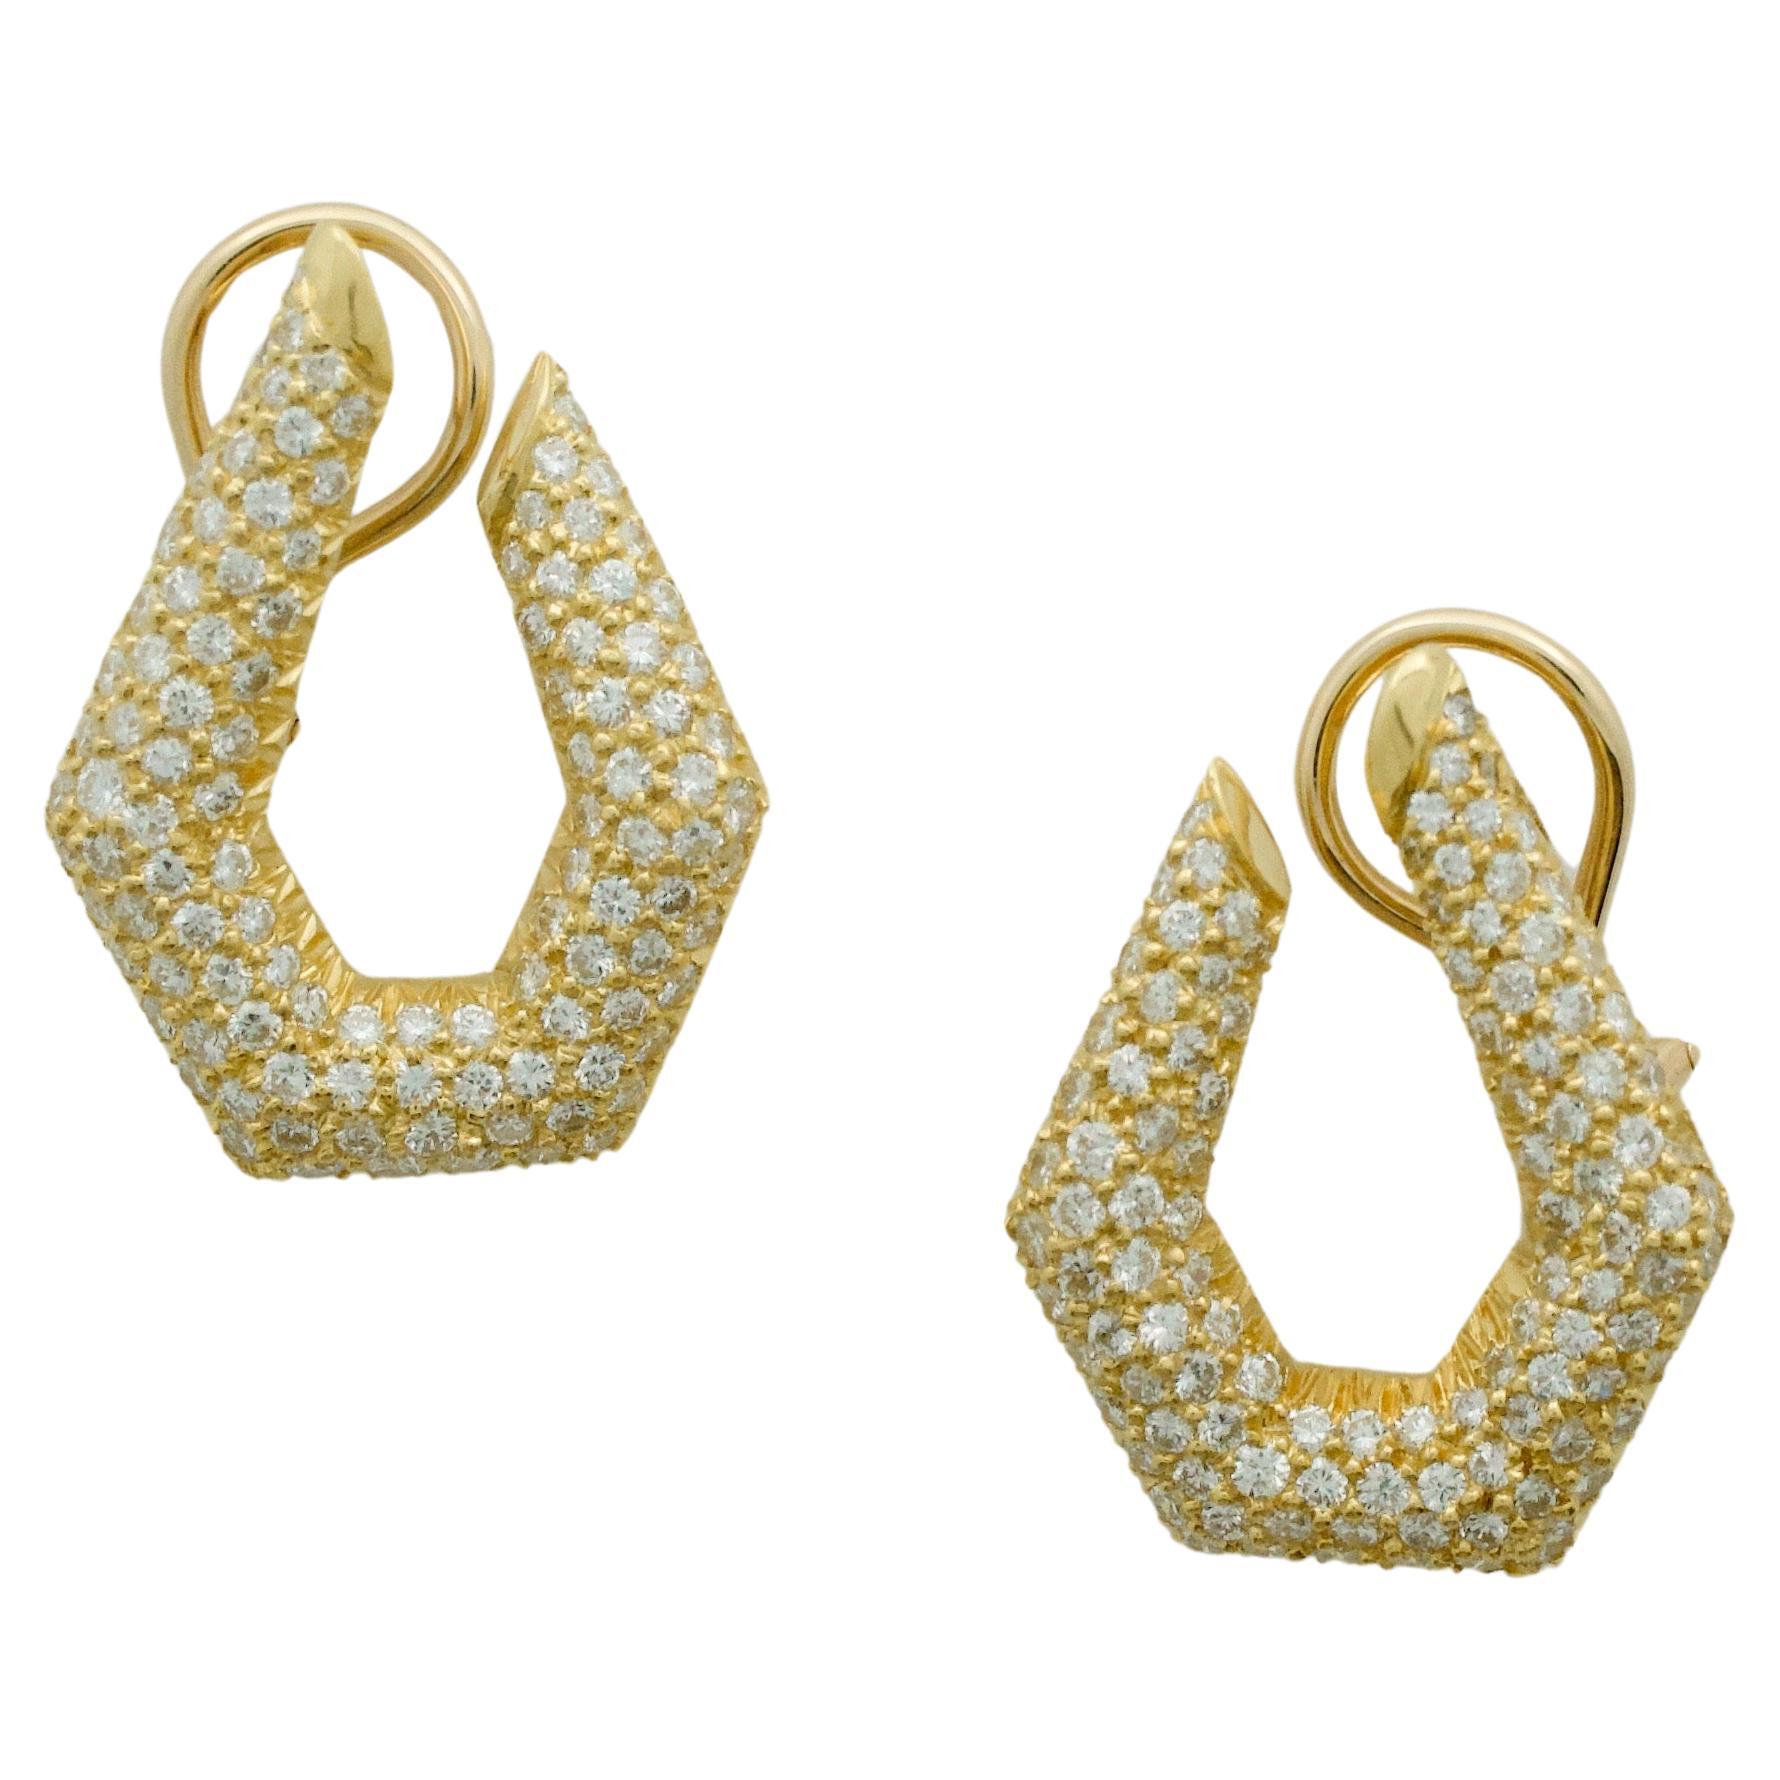 La Triomphe Pave' Diamond Earrings Circa 1980's For Sale